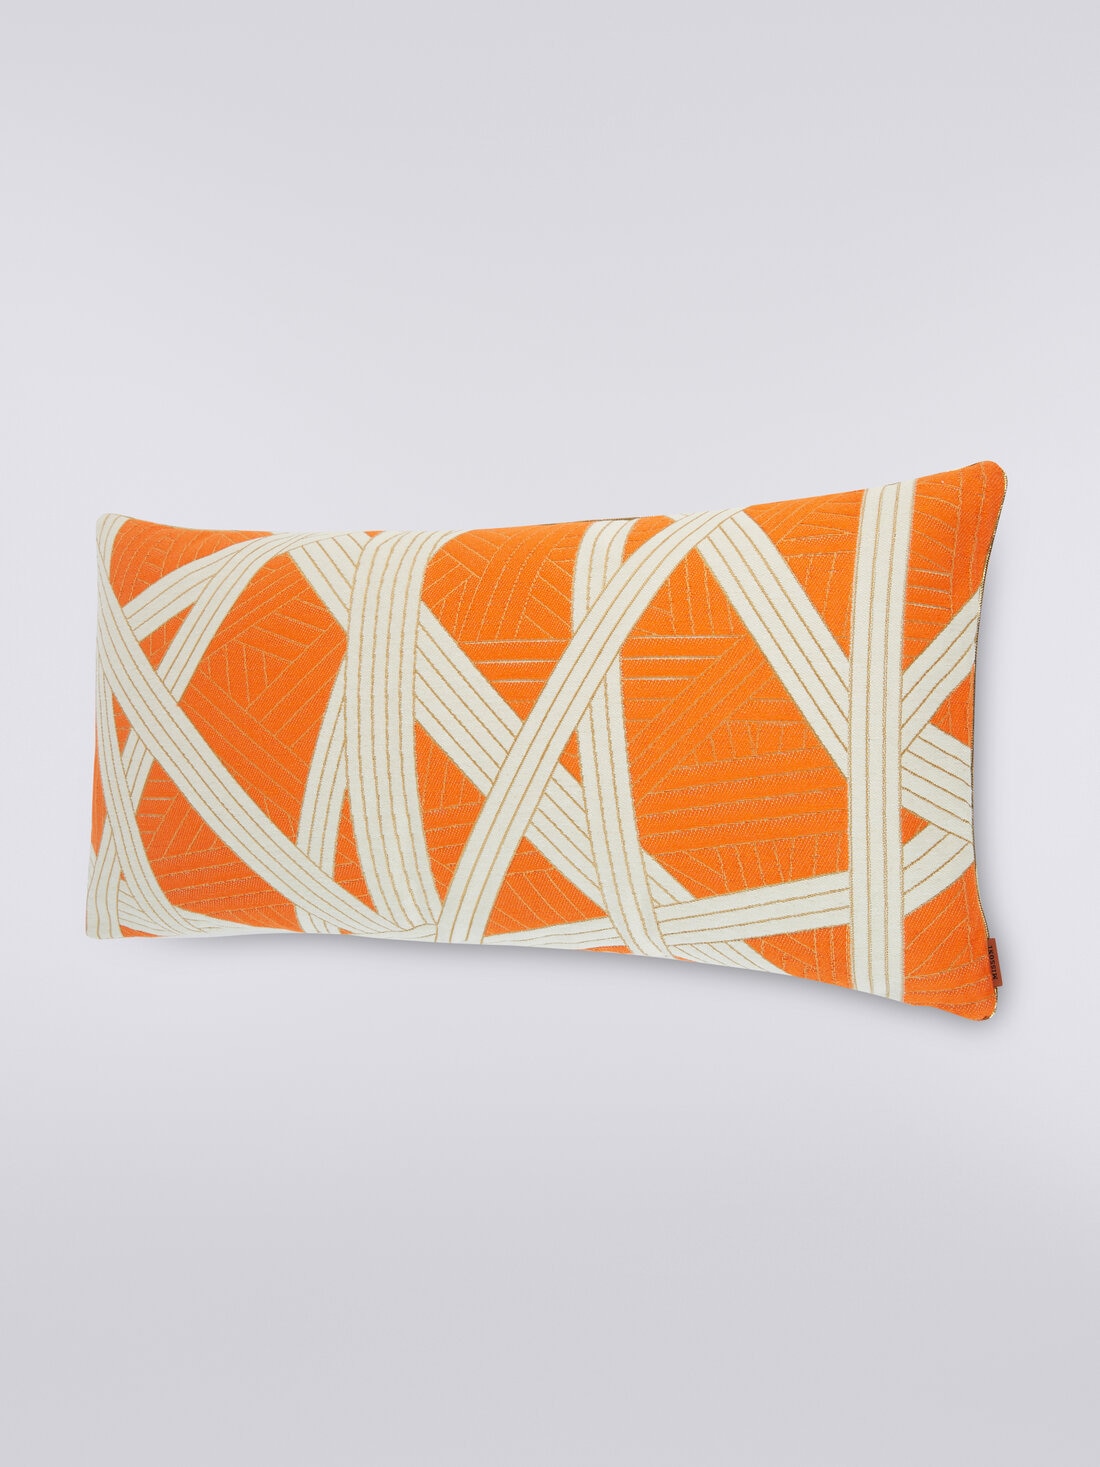 Nastri 30x60 cm cushion with stitching, Orange - 8051575830778 - 1